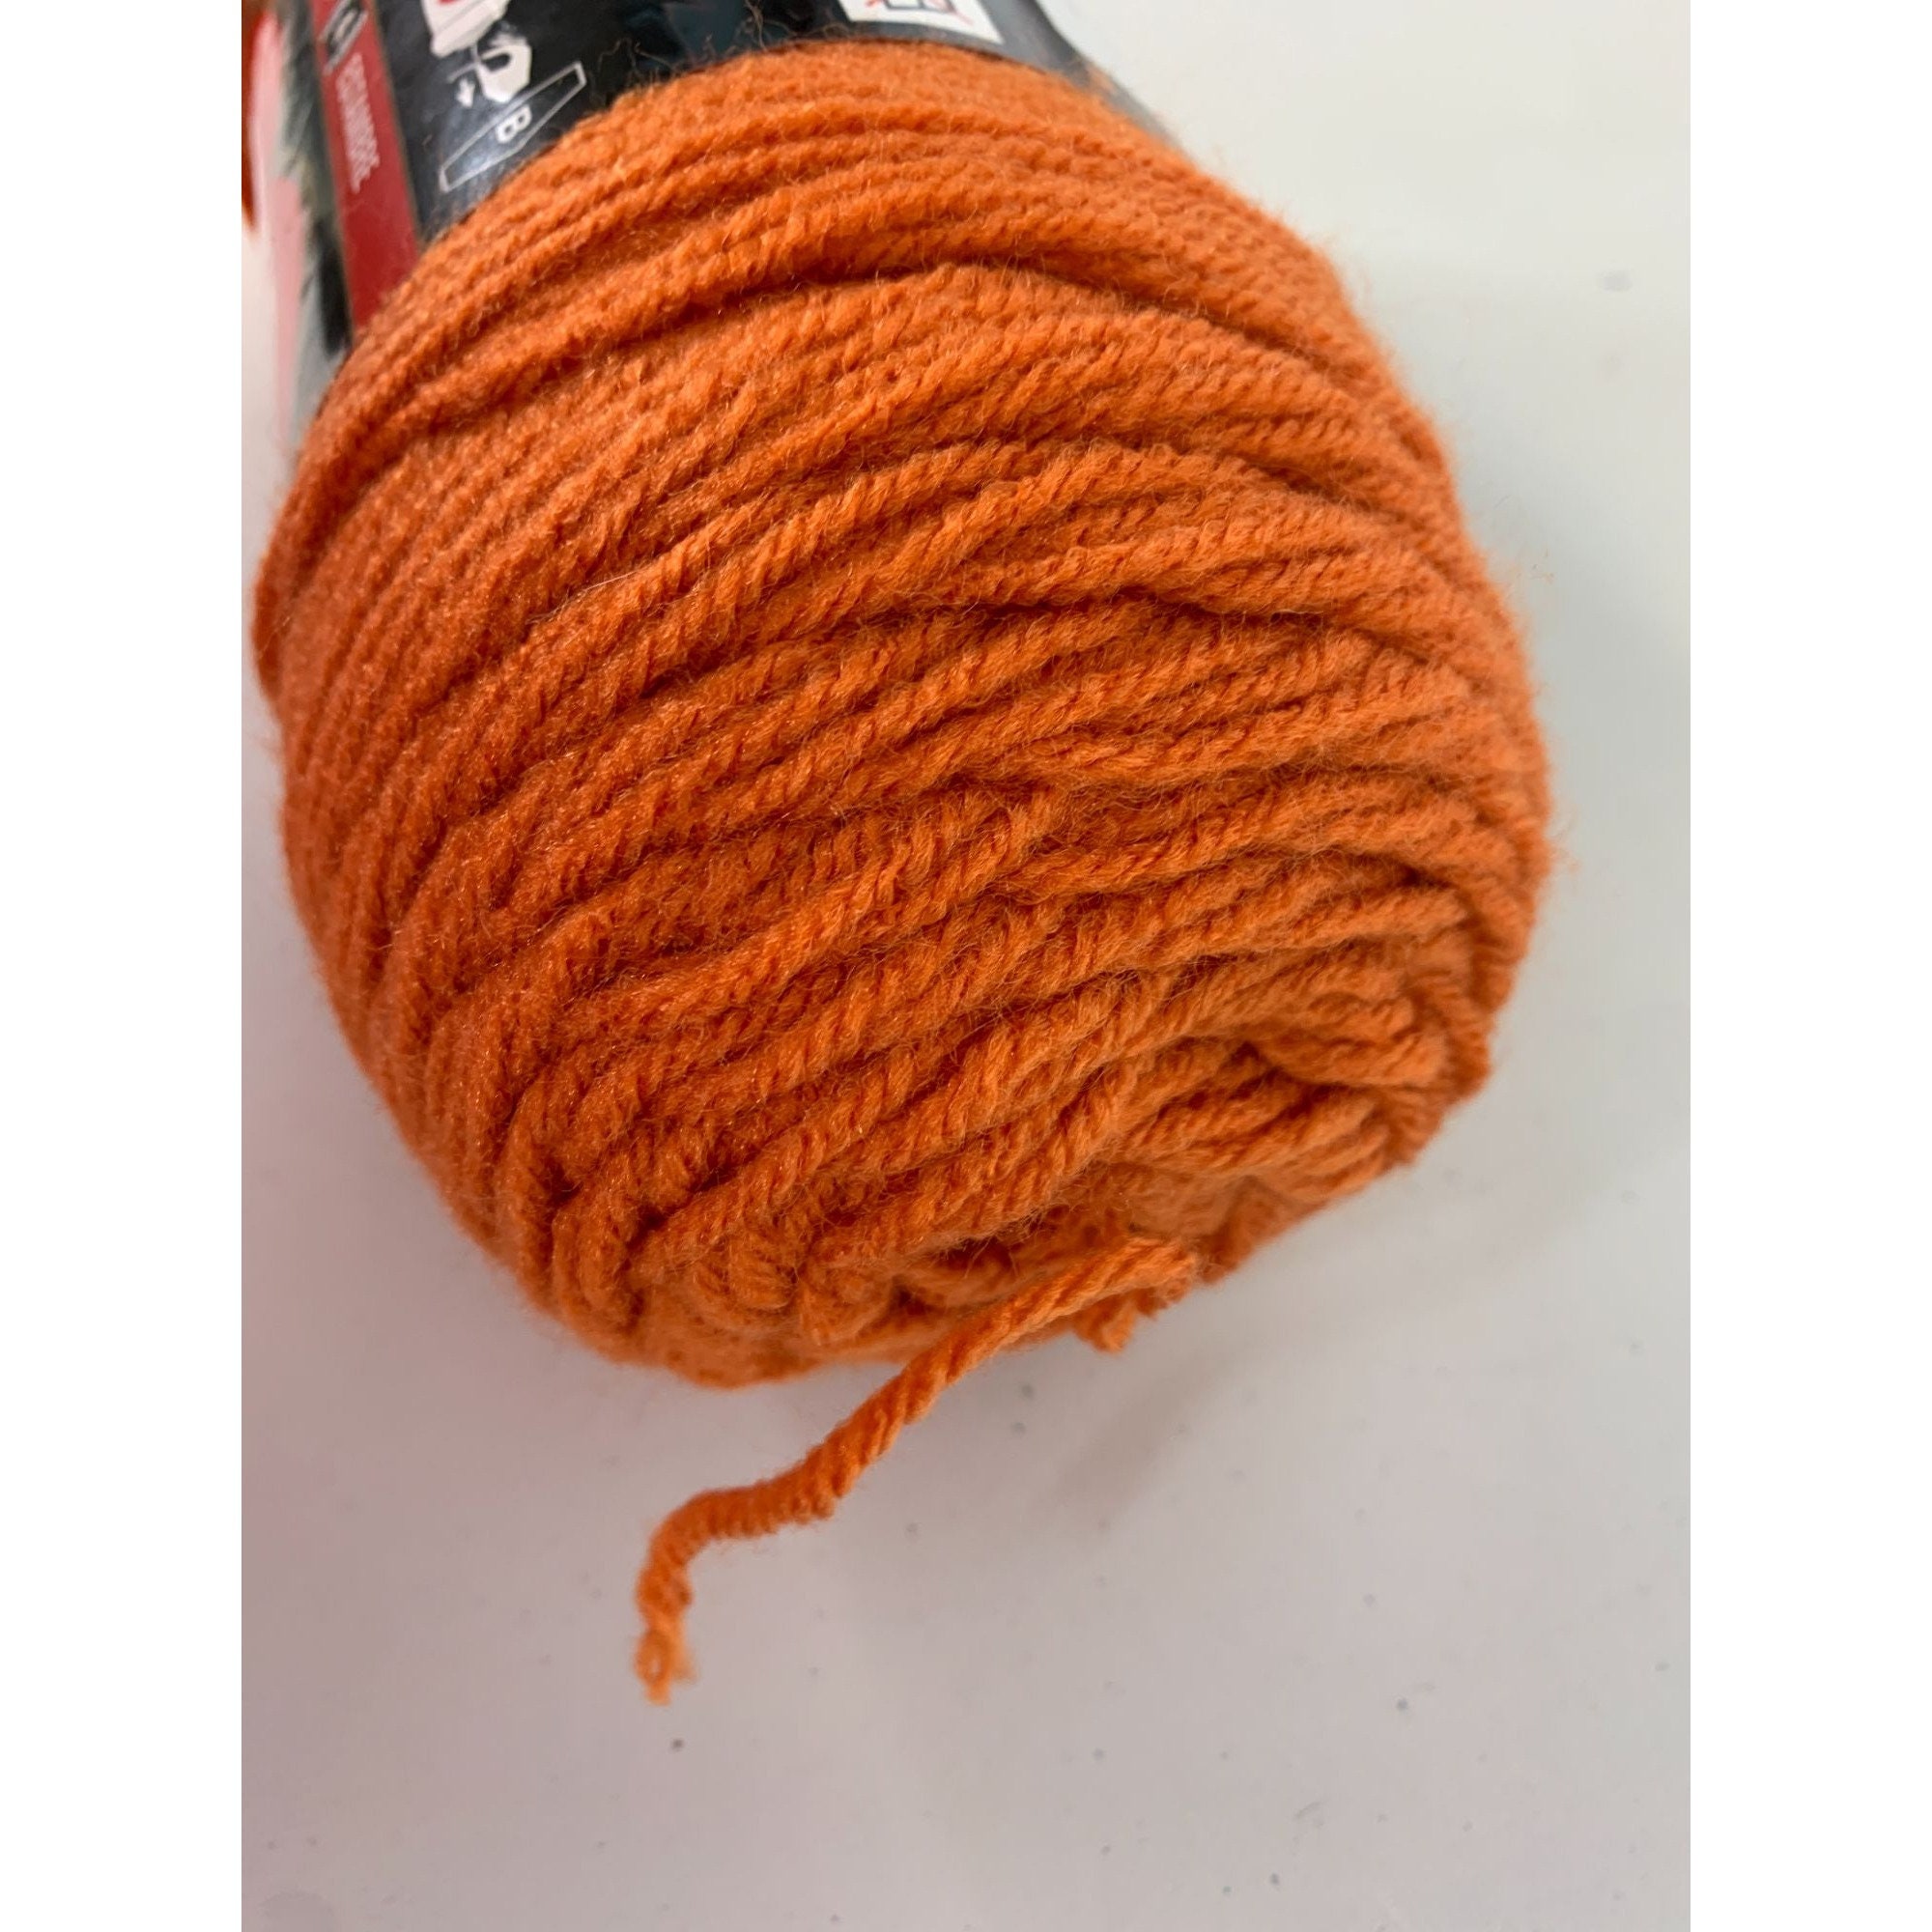 Bernat Super Value Carrot Yarn - 3 Pack Of 198g/7oz - Acrylic - 4